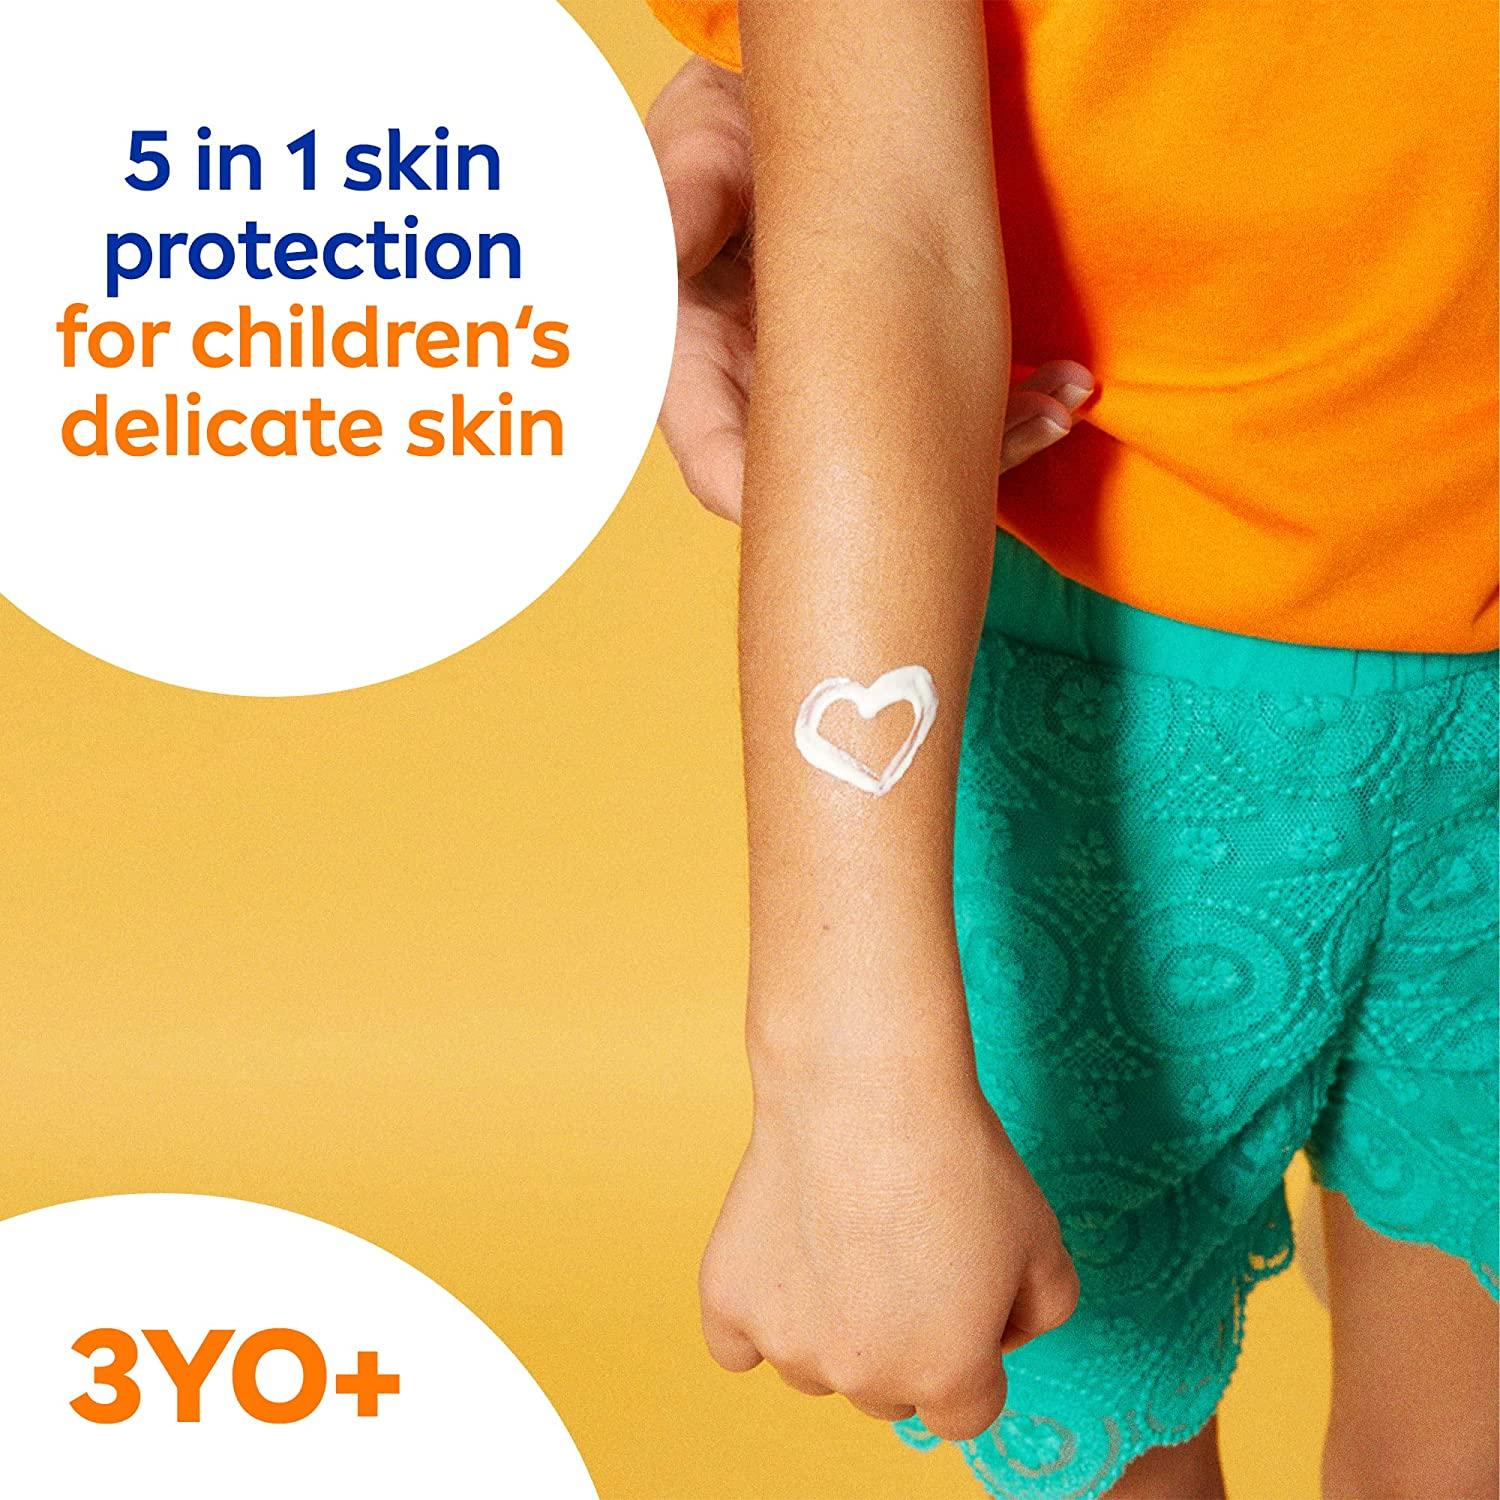 Nivea Sun Kids Protection Lotion, Spf 50+ - Wellness Shoppee